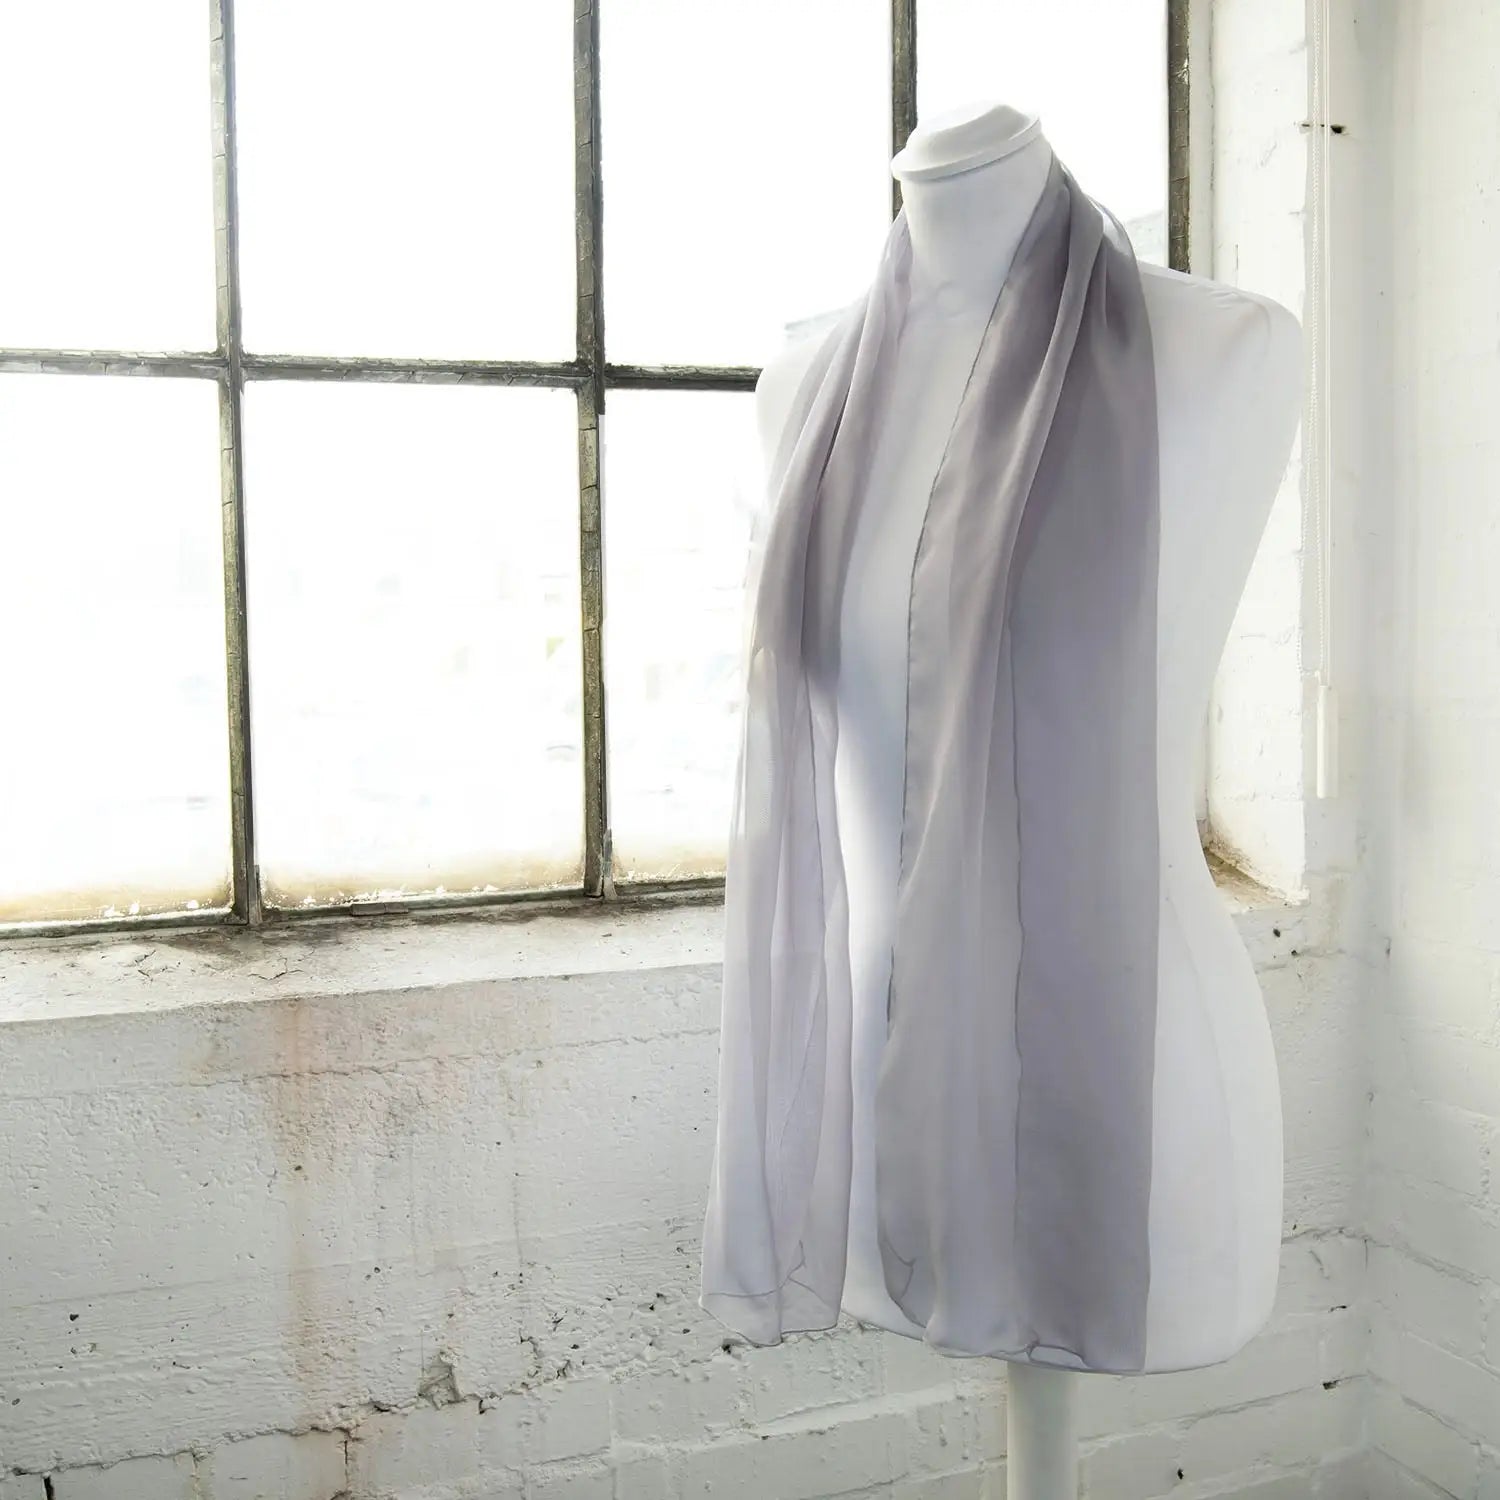 Classic plain chiffon scarf draped over mannequin near window.